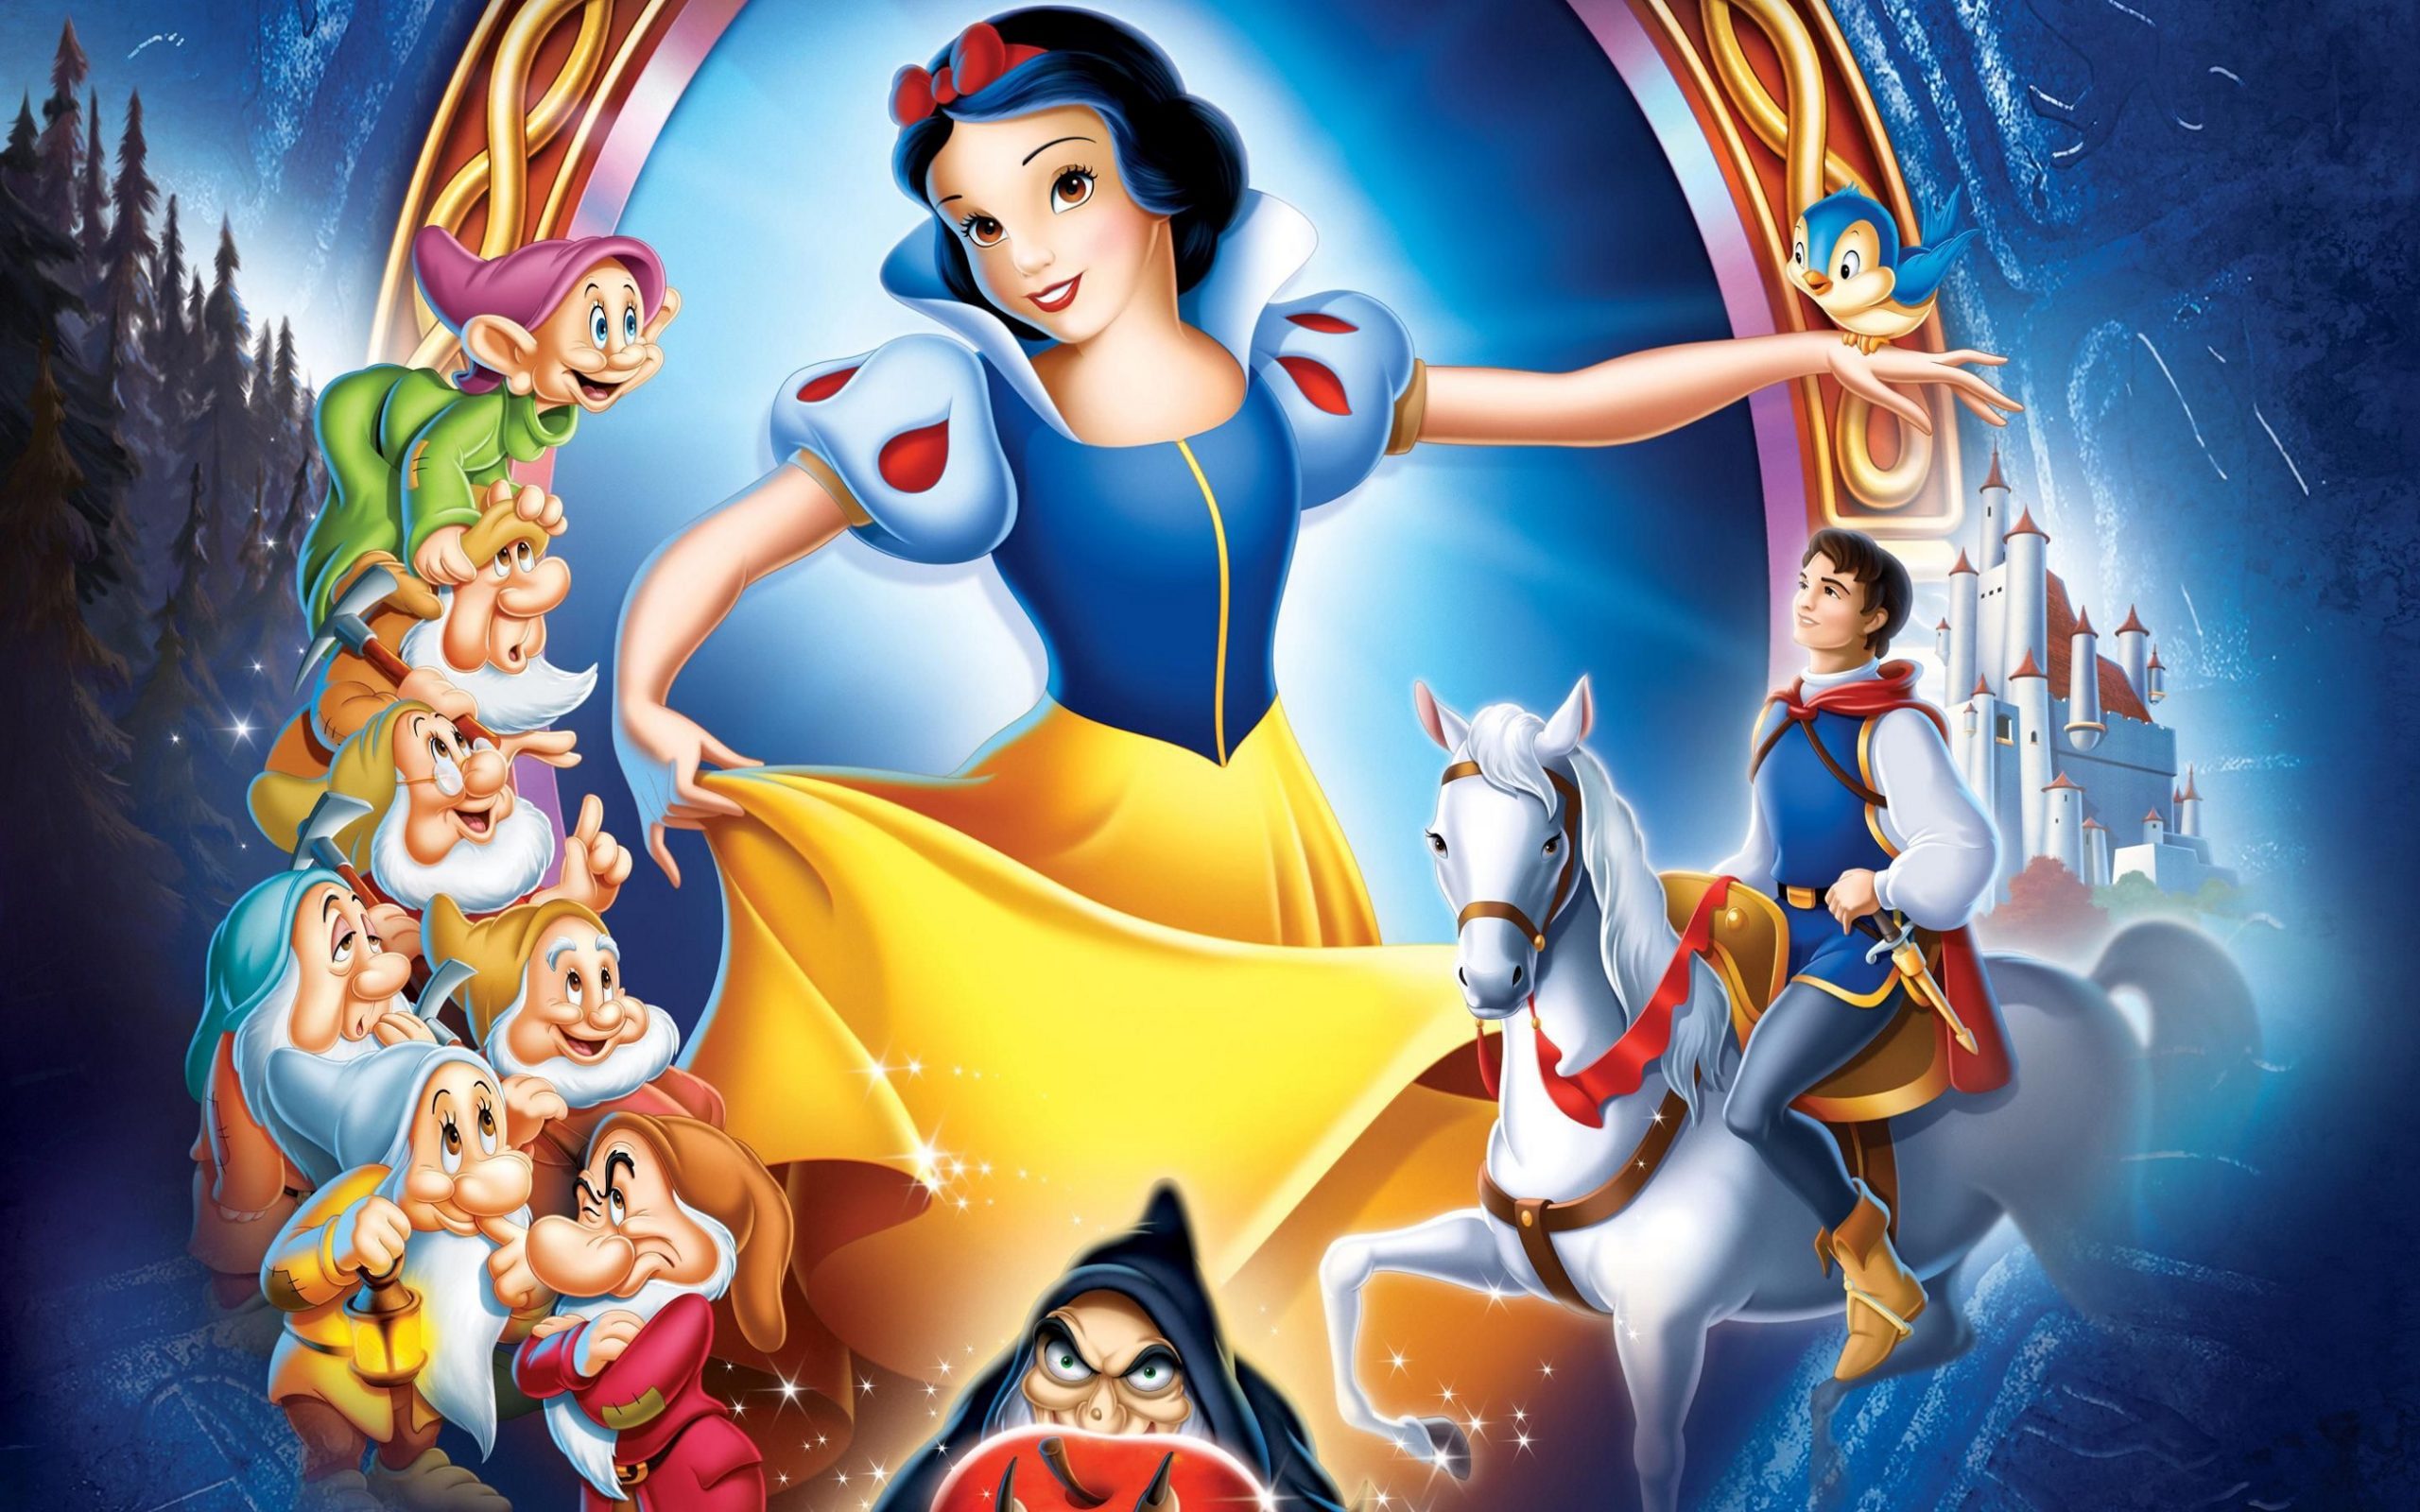 "Snow White" Gets Release Date Sada El balad